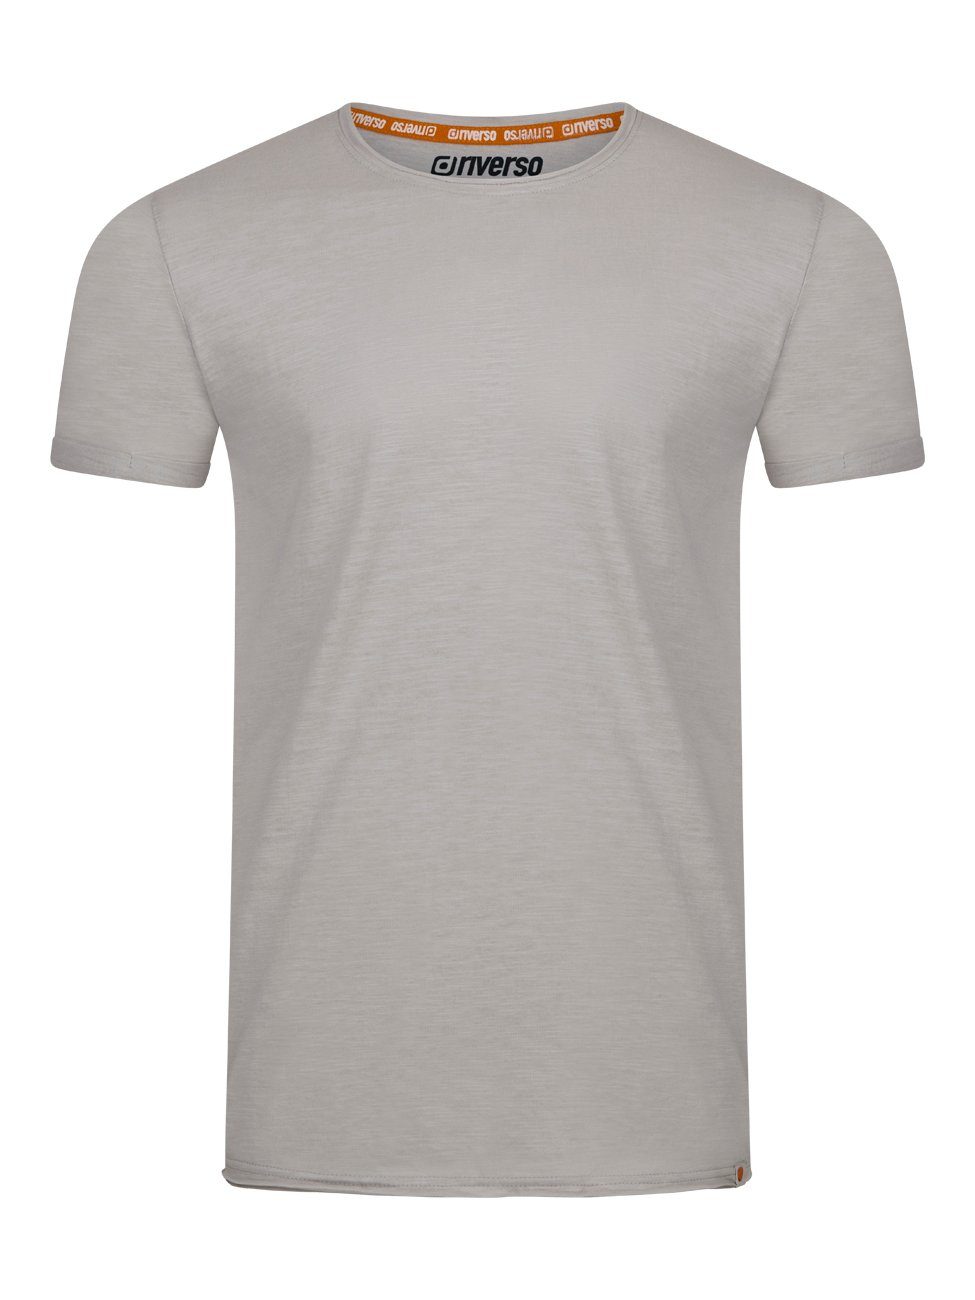 Shirt aus Herren T-Shirt 100% Baumwolle Shirt (3-tlg) Grey Rundhalsausschnitt Tee Smoke Regular RIVLenny Fit Basic Kurzarm mit riverso